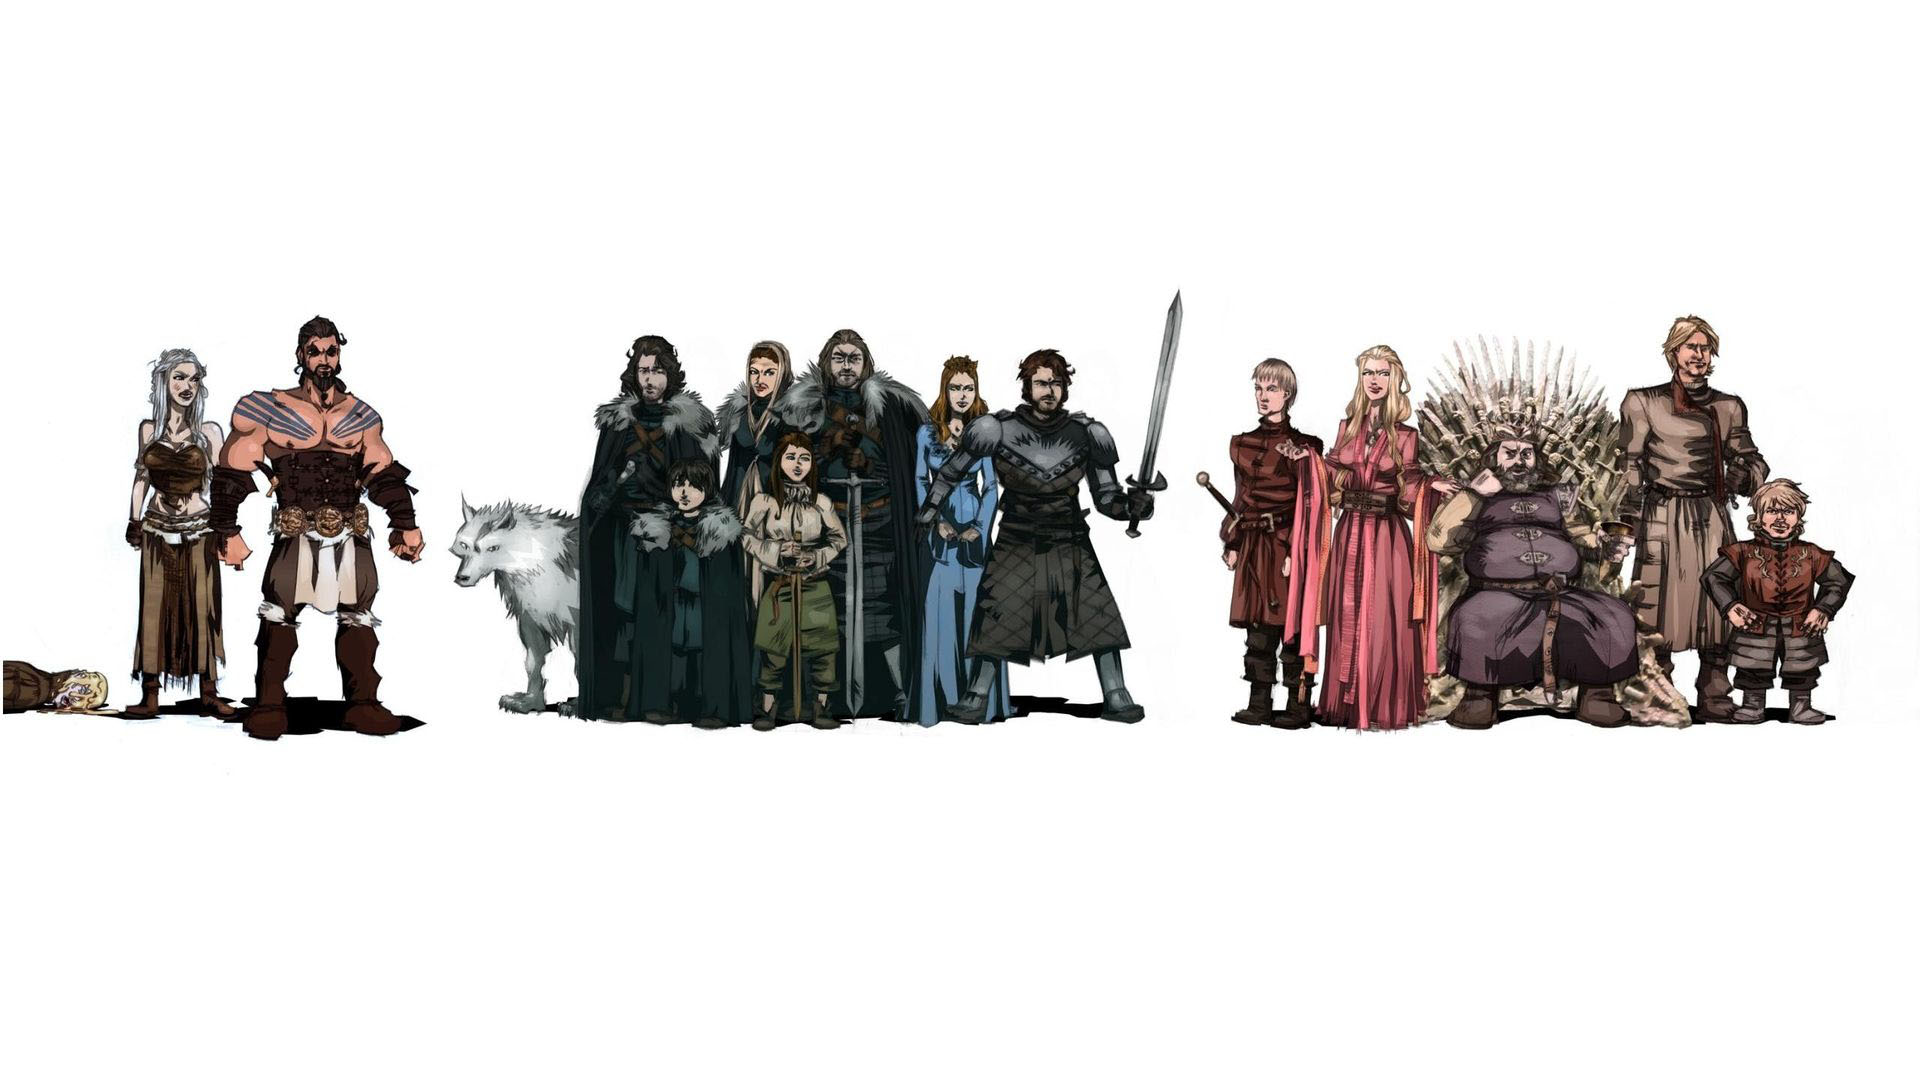 Game of Thrones Artwork Characters Wallpaper   DreamLoveWallpapers 1920x1080